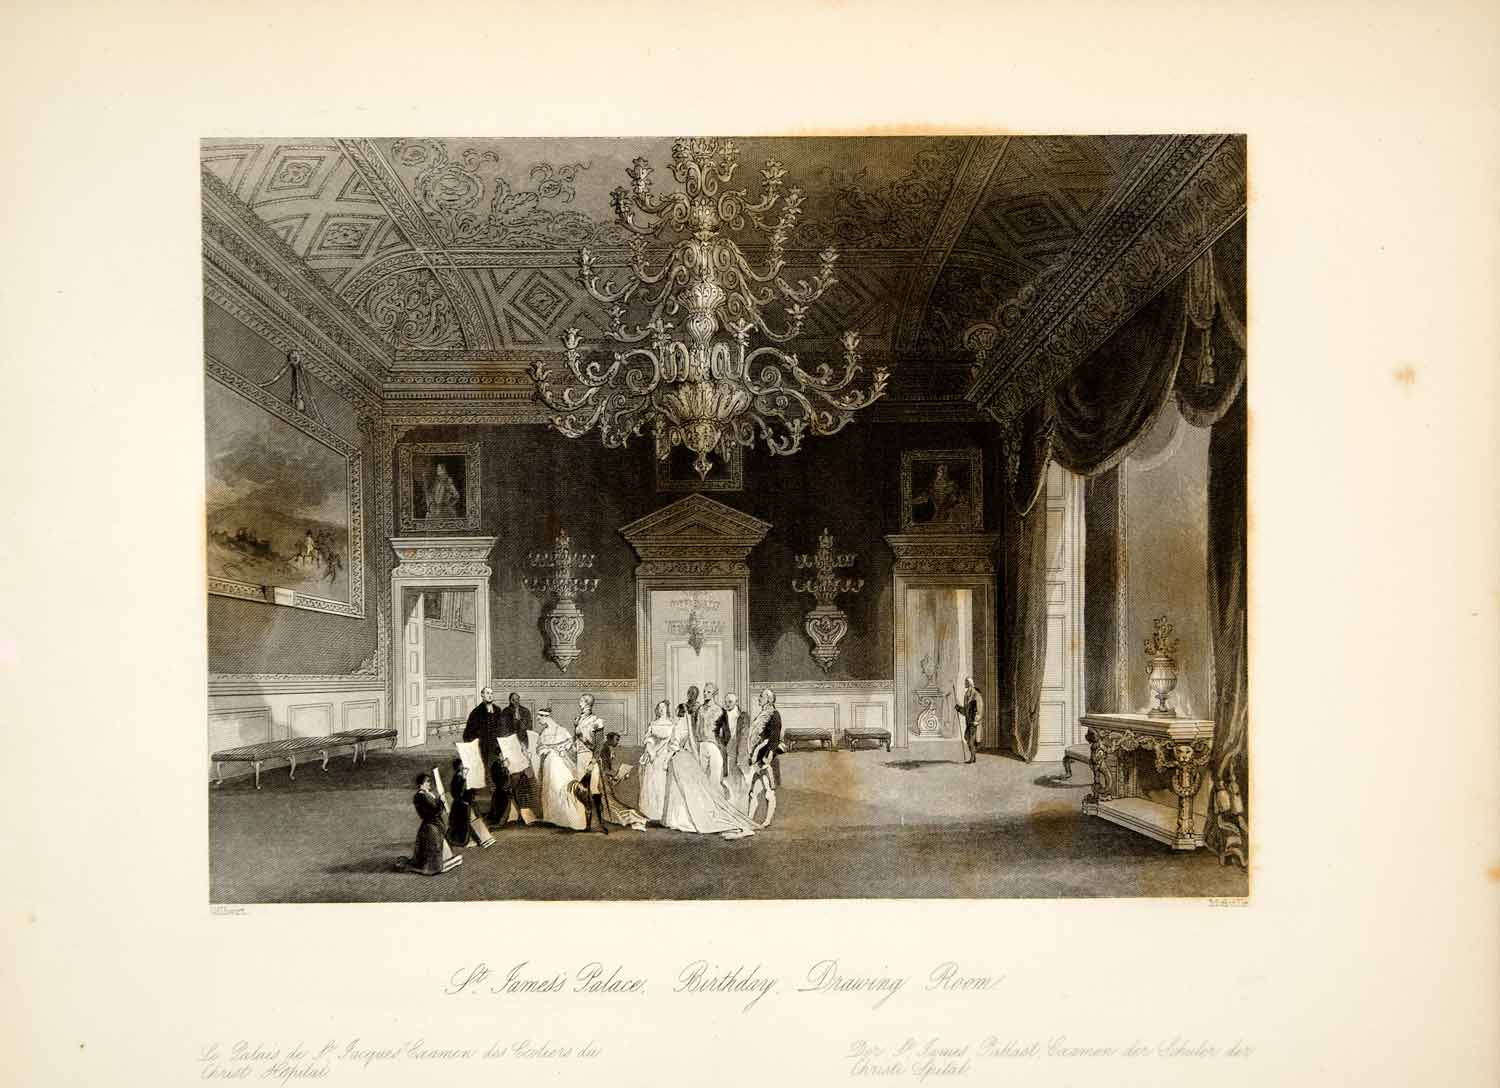 1845 Steel Engraving J Gilbert St James Palace Birthday Drawing Room XGHD9